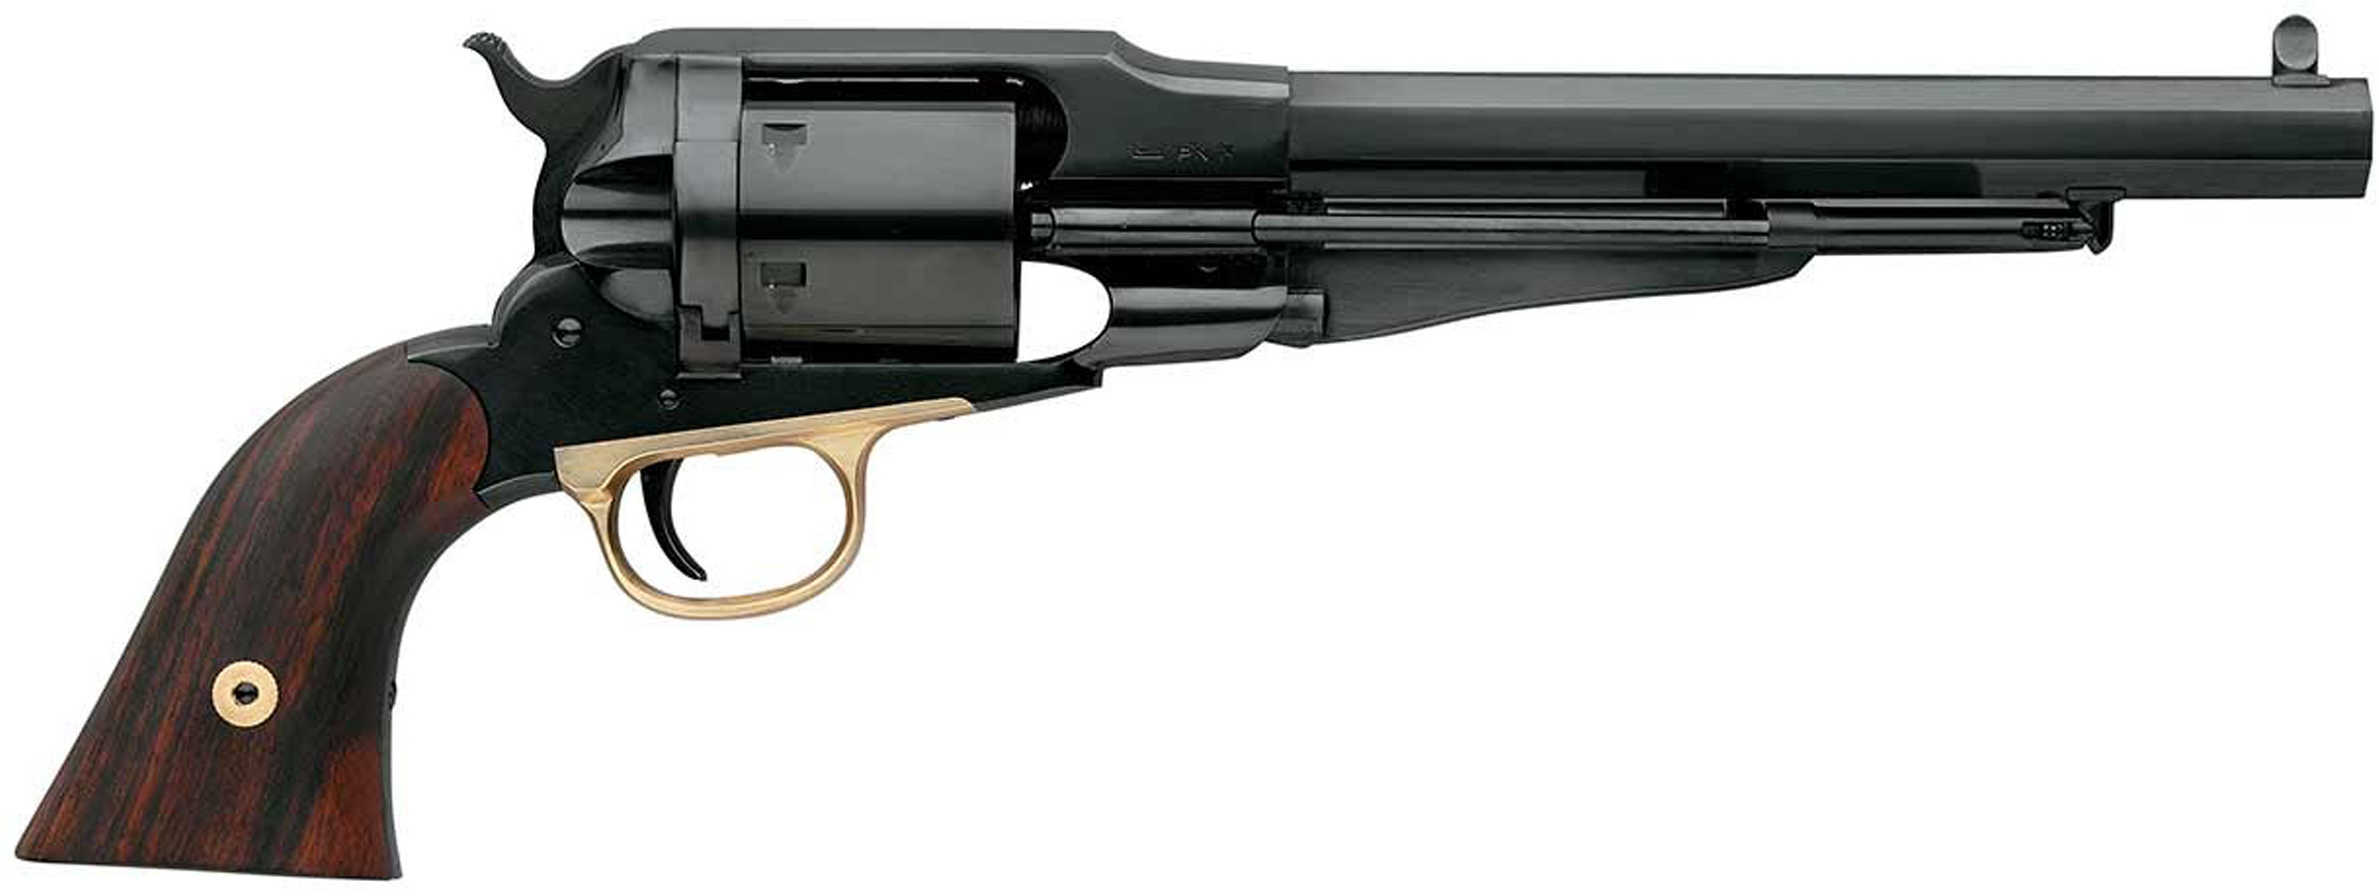 Taylor's & Company Remington Conversion 7.375" Barrel 6 Round Blued Revolver 920100